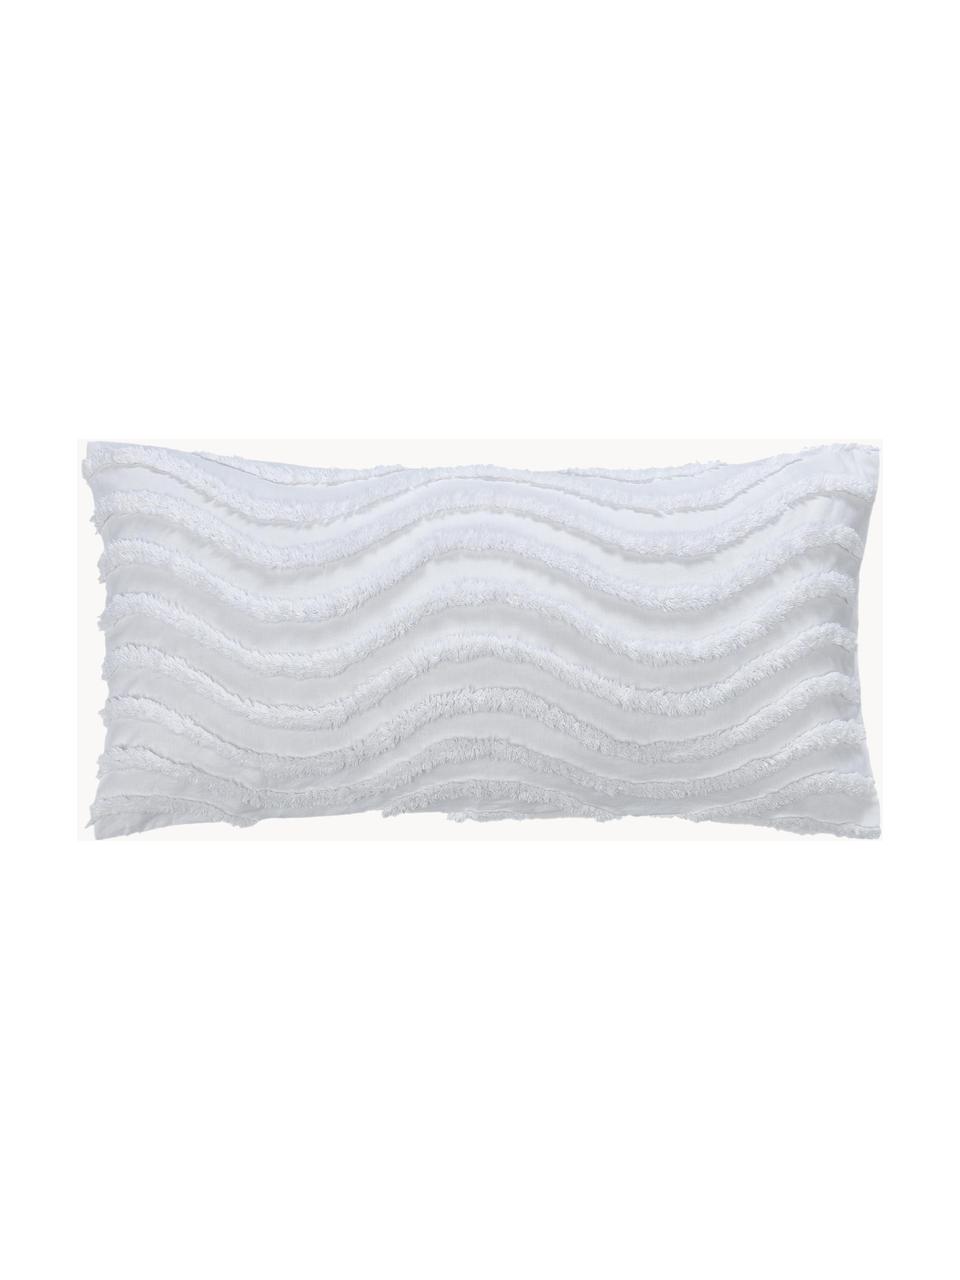 Fundas de almohada de percal con tejido capitoné Felia, 2 uds., Blanco, An 40 x L 80 cm